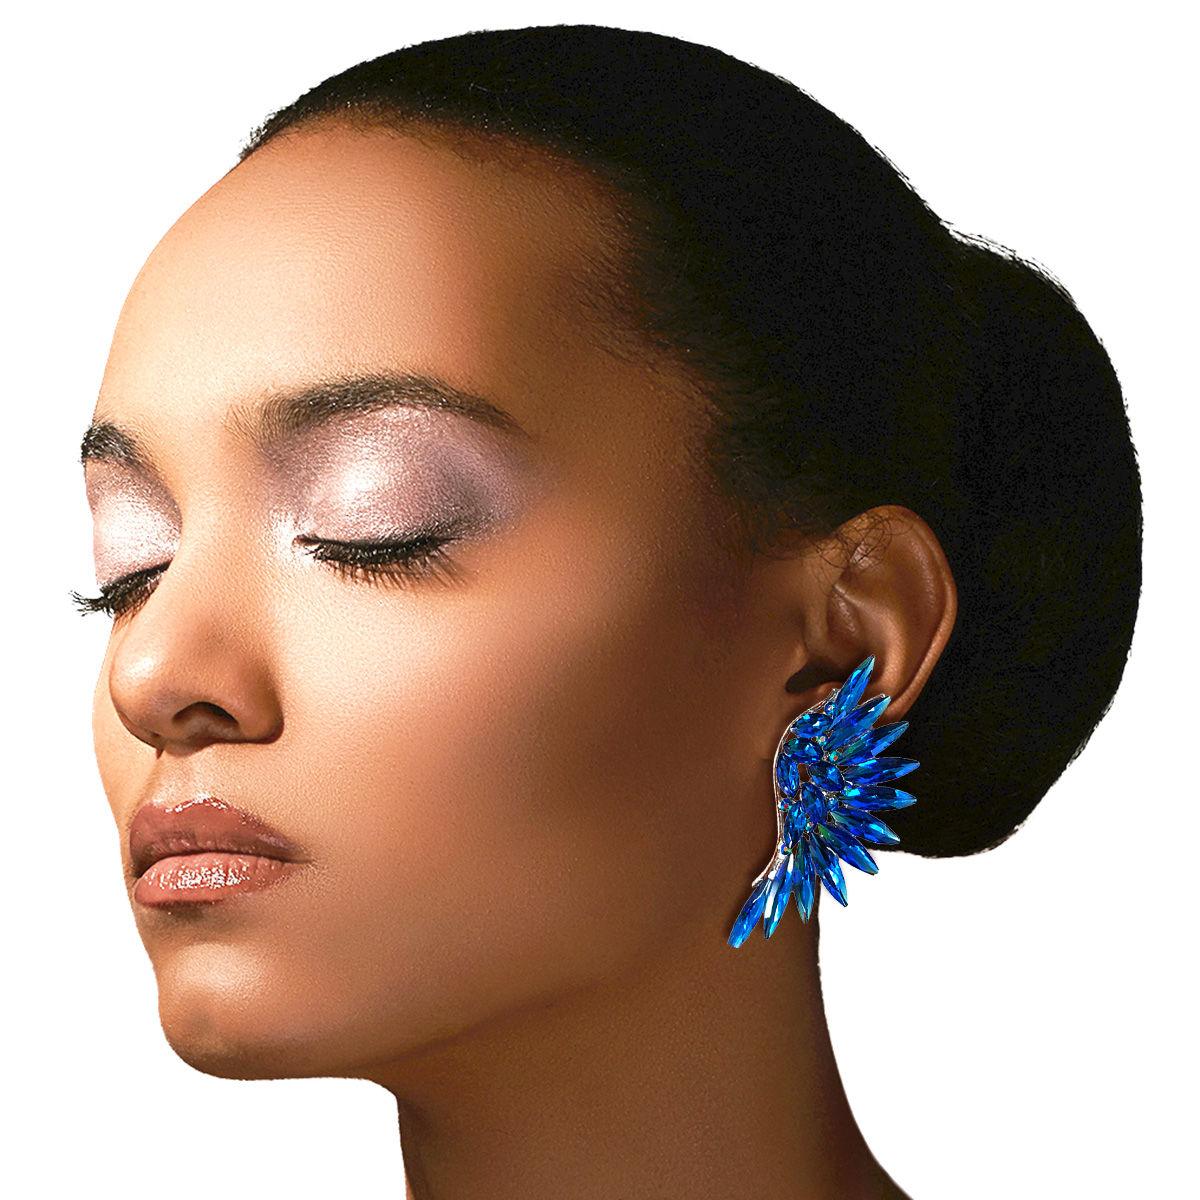 Stunning Royal Blue Wing Earrings for Elegant Style